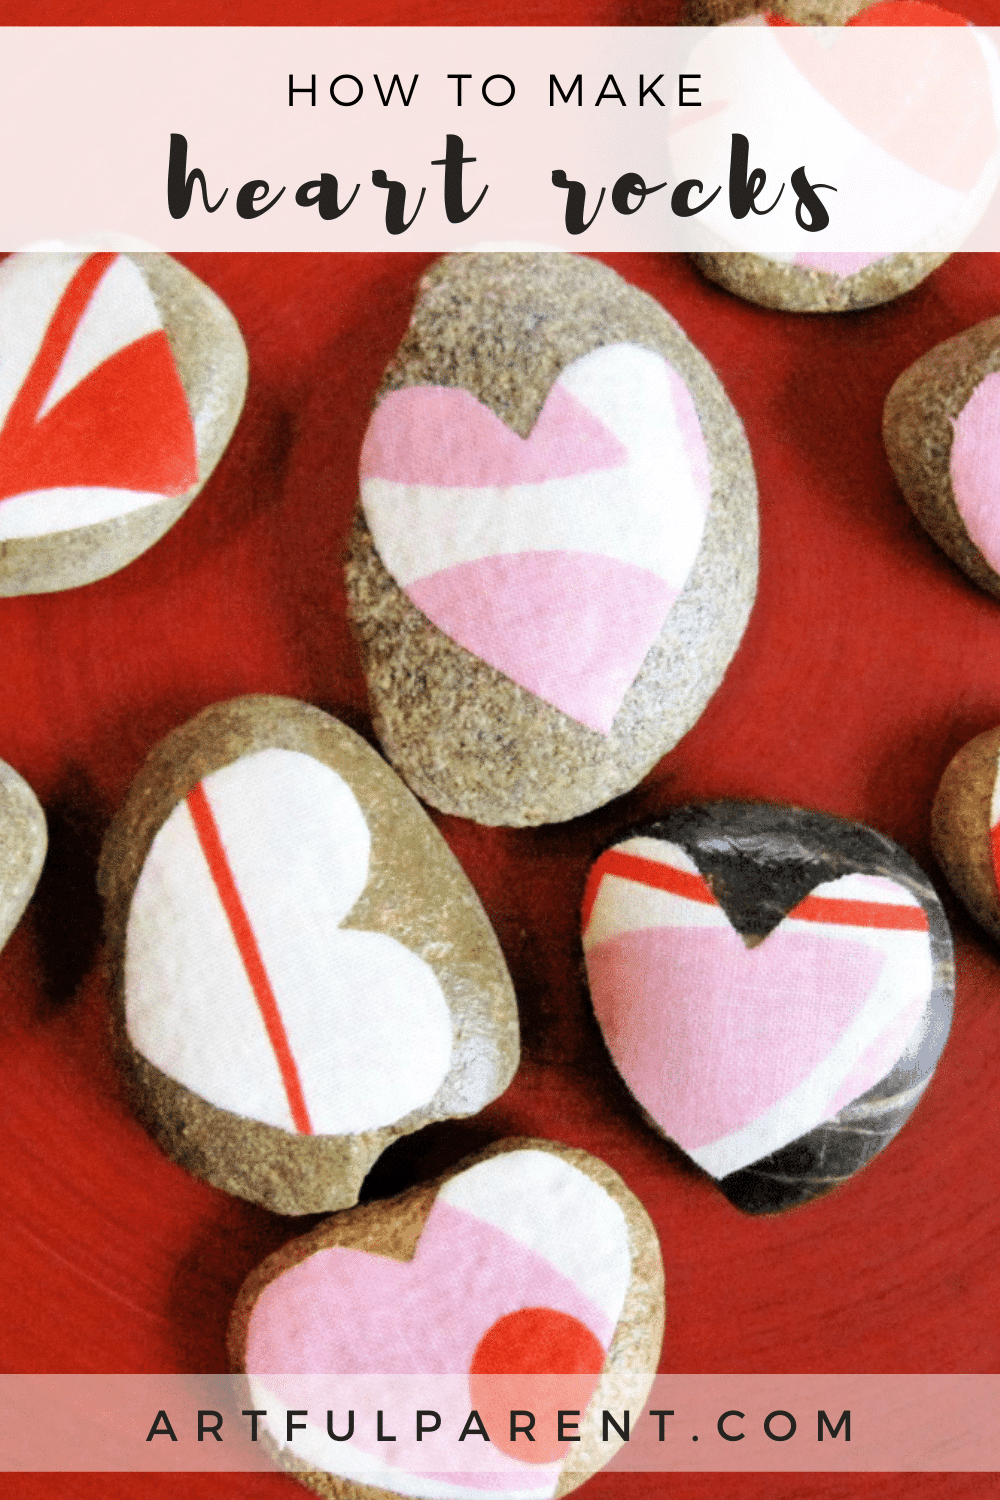 How to Make Heart Rocks